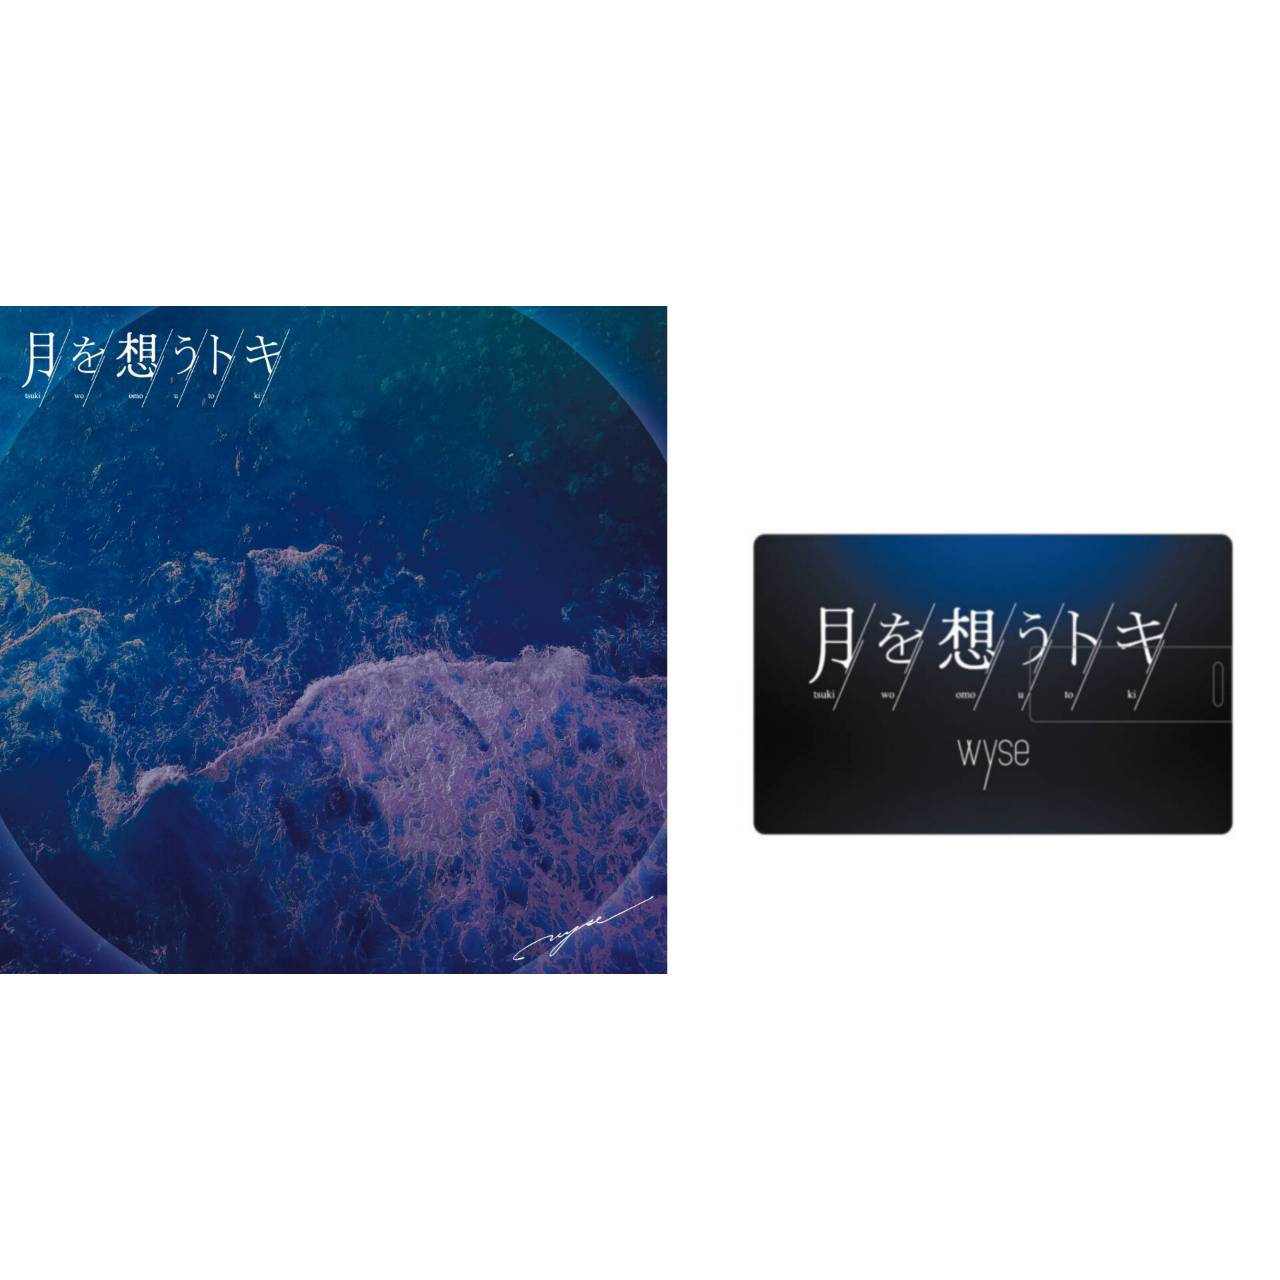 【CD+USB】New Single「月を想うトキ」